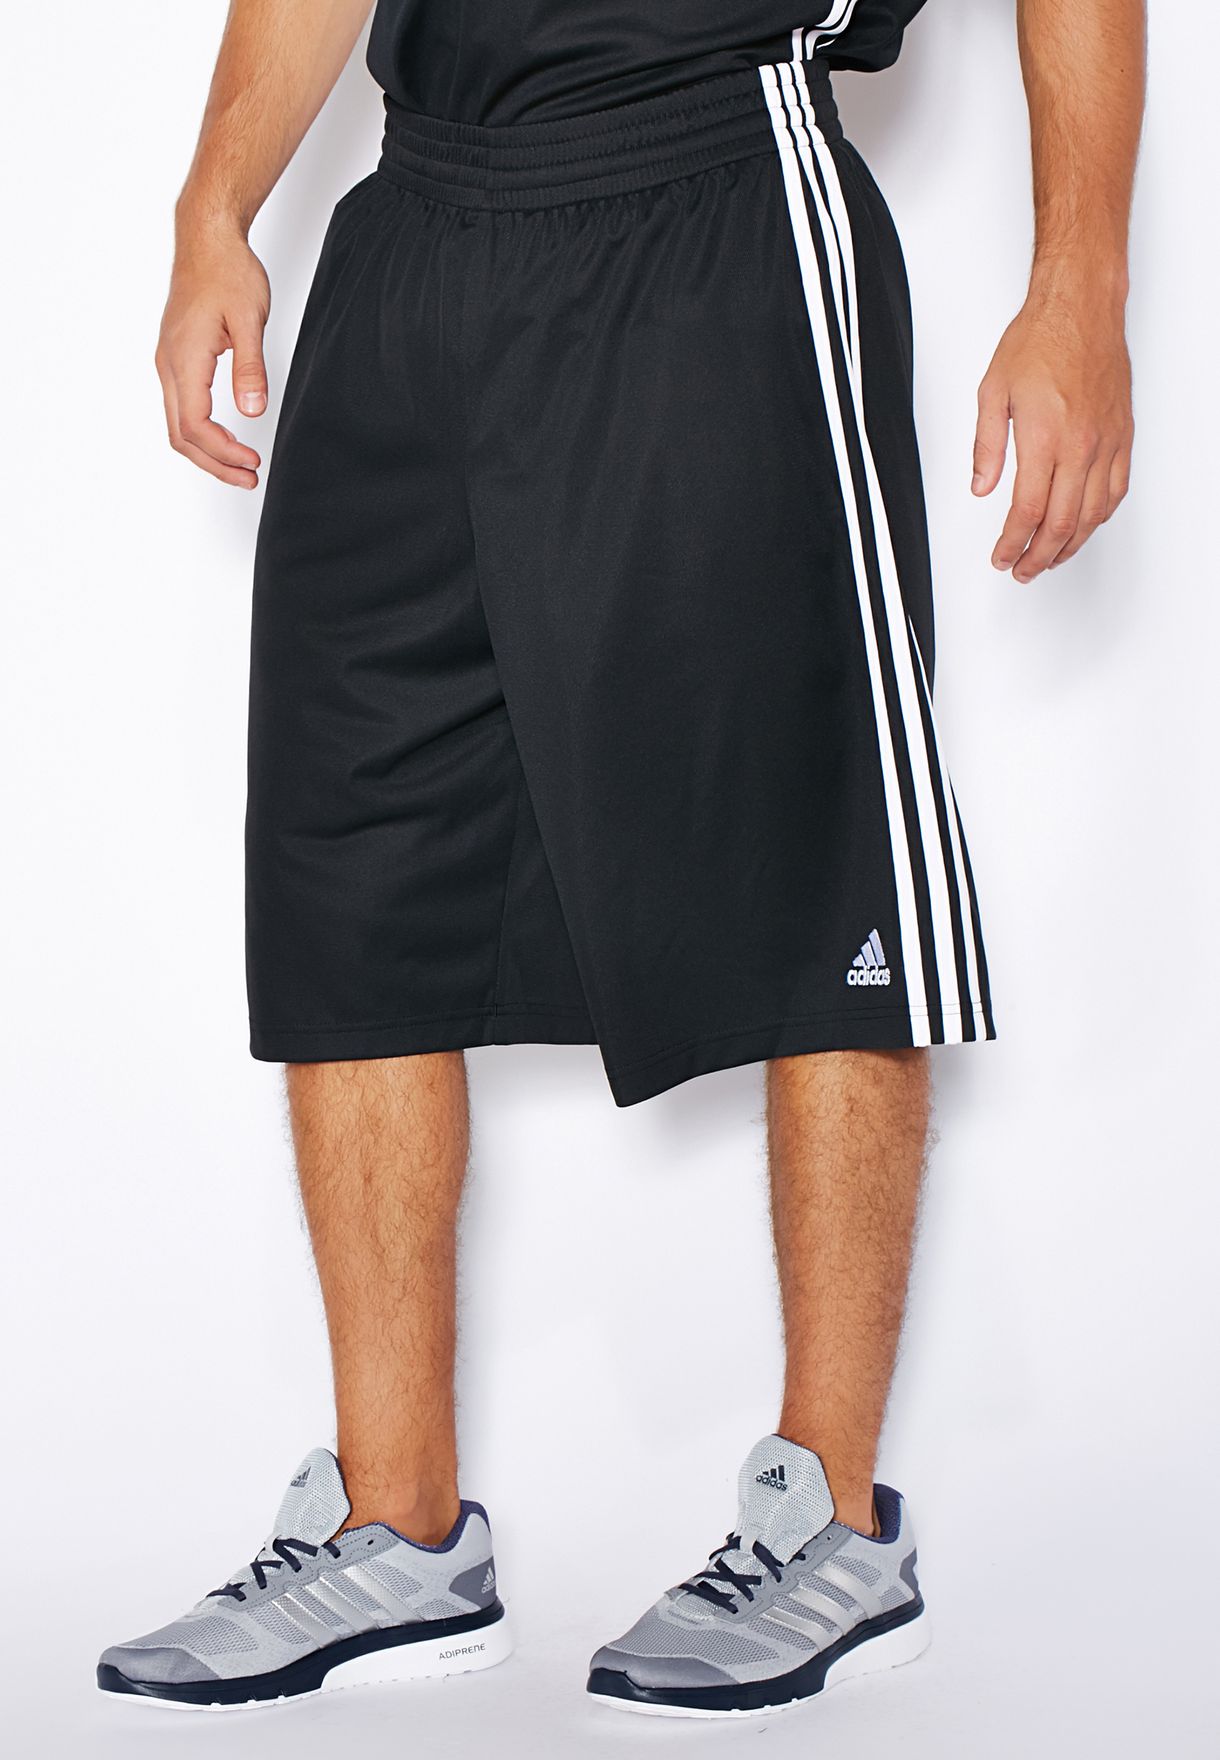 adidas commander shorts